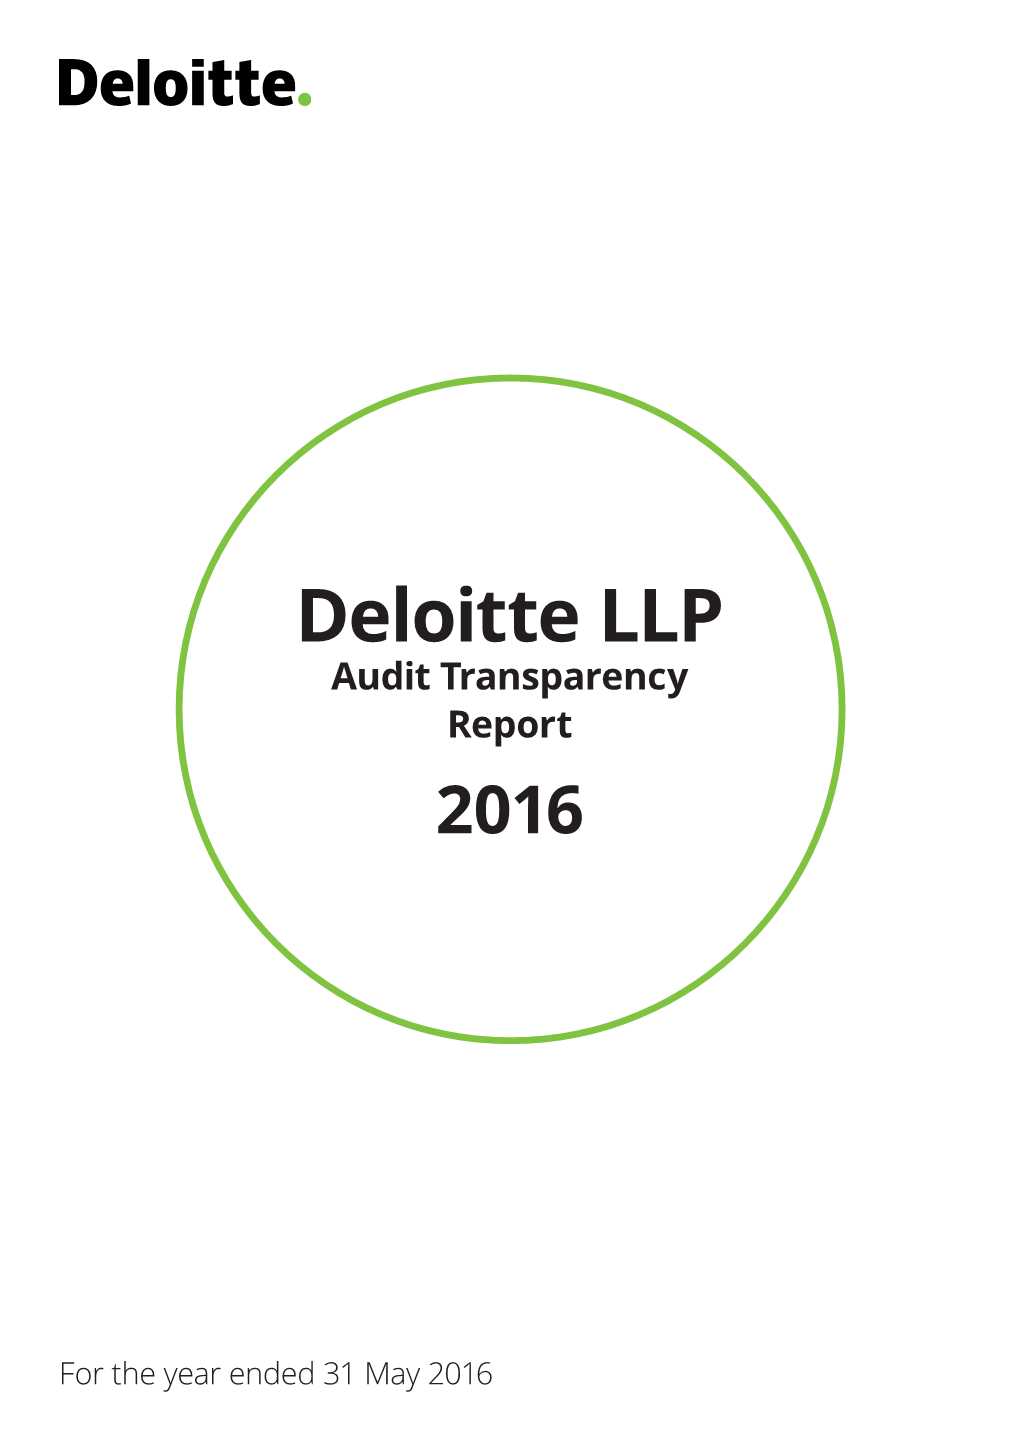 Deloitte LLP Audit Transparency Report 2016